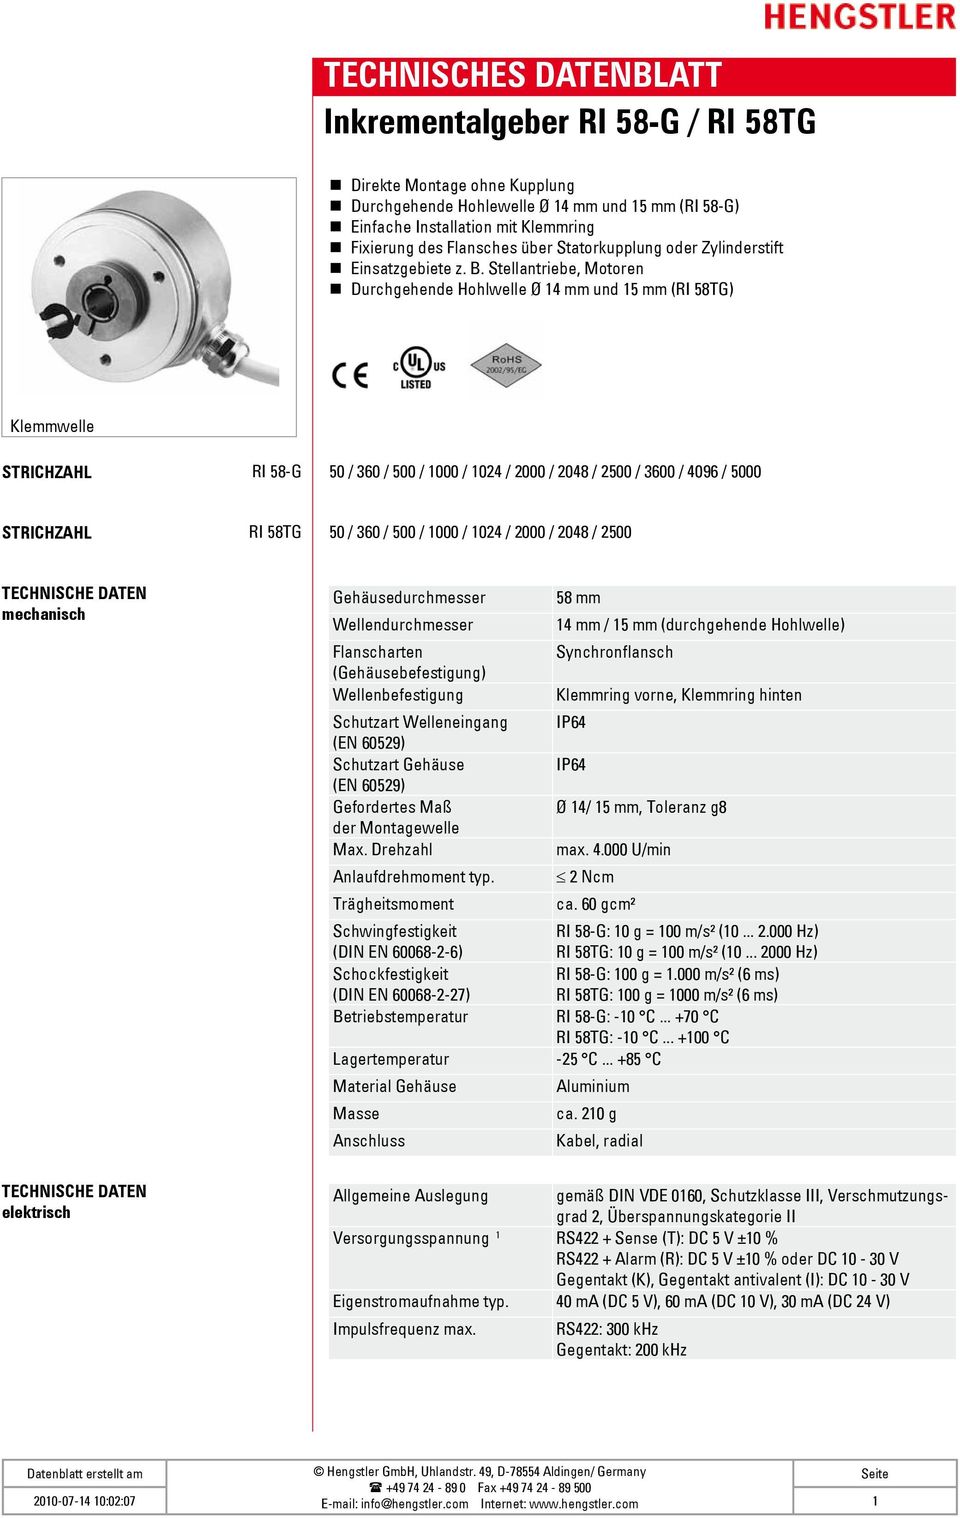 500 / 000 / 04 / 000 / 048 / 500 mechanisch Gehäusedurchmesser Wellendurchmesser Flanscharten (Gehäusebefestigung) Wellenbefestigung Schutzart Welleneingang (EN 6059) Schutzart Gehäuse IP64 (EN 6059)